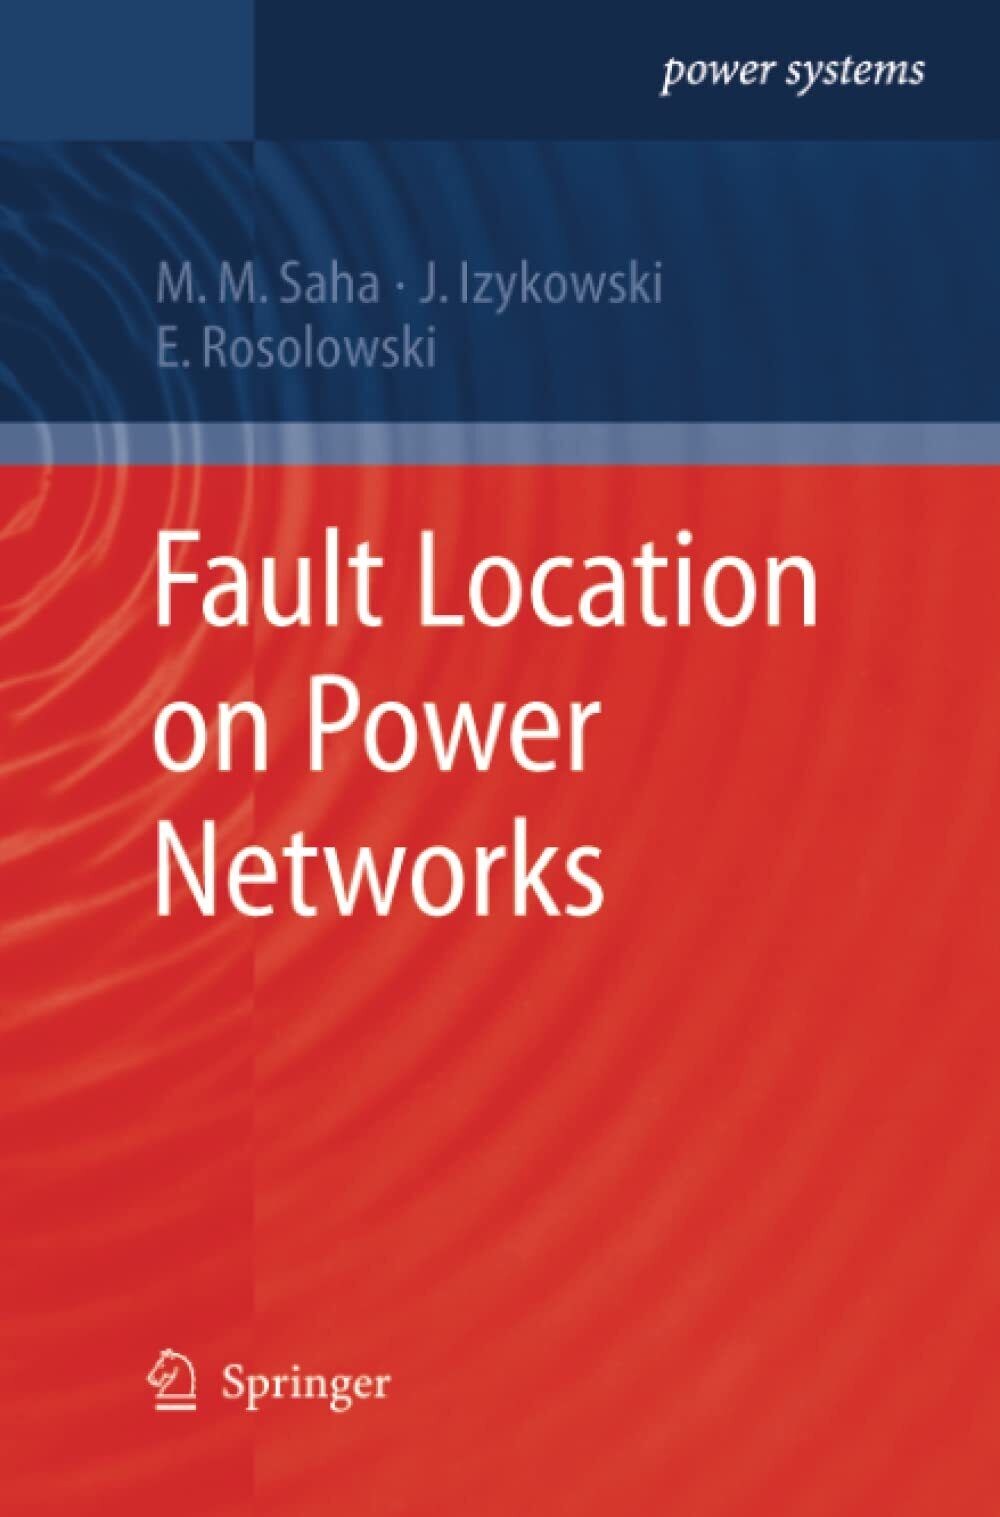 Fault Location on Power Networks - Jan Jozef Izykowski - Springer, 2012 libro usato